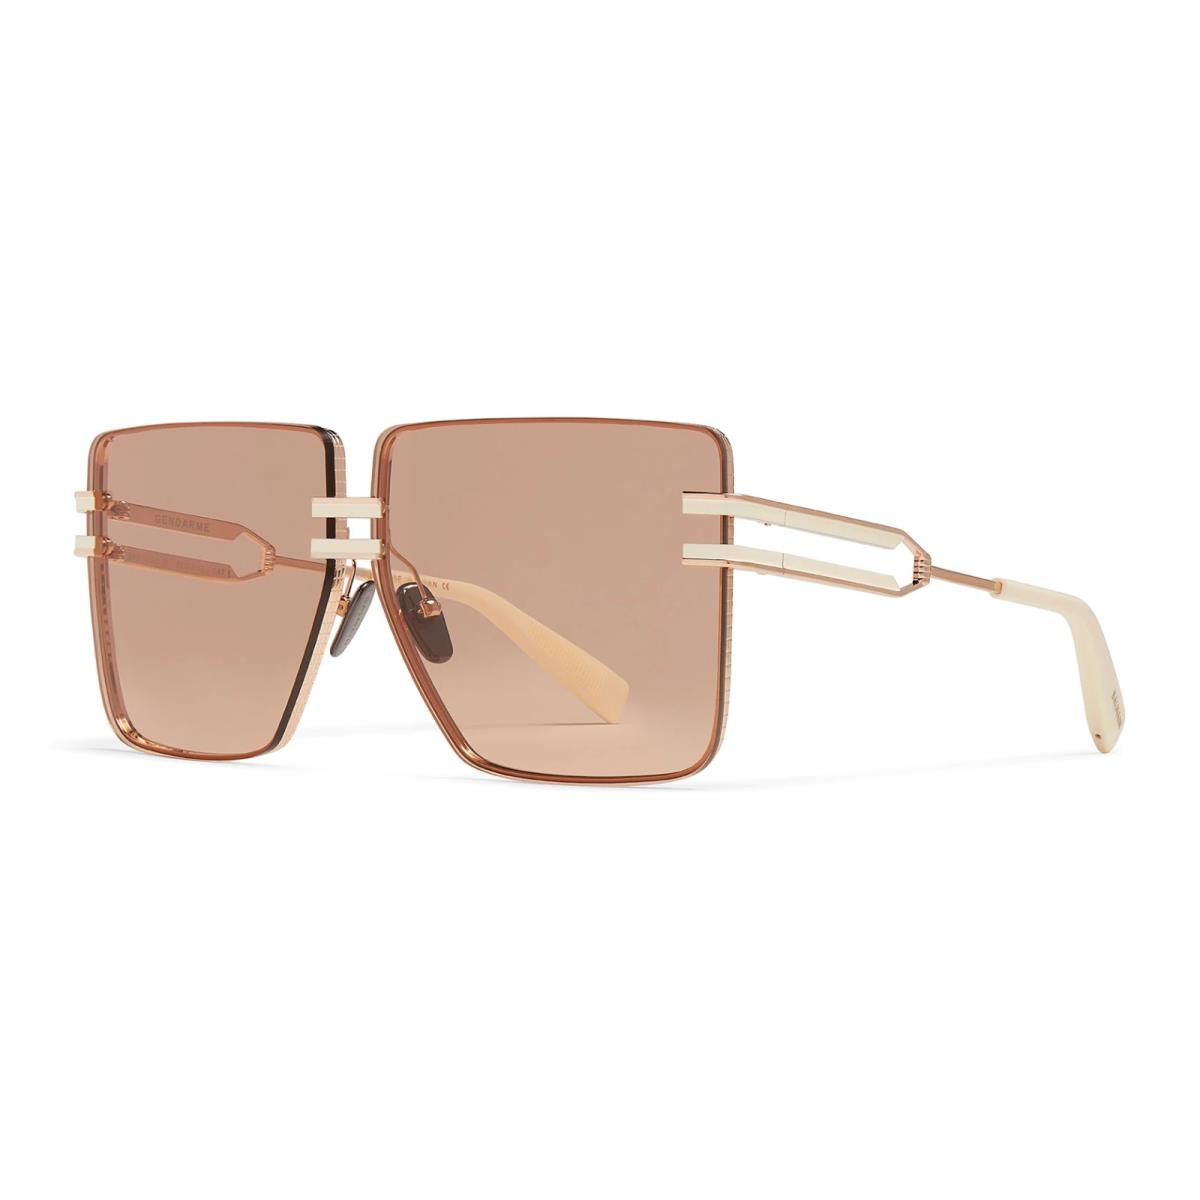 Balmain Sunglasses Gendarme Rose Ivory Frames Pink Lens 66MM